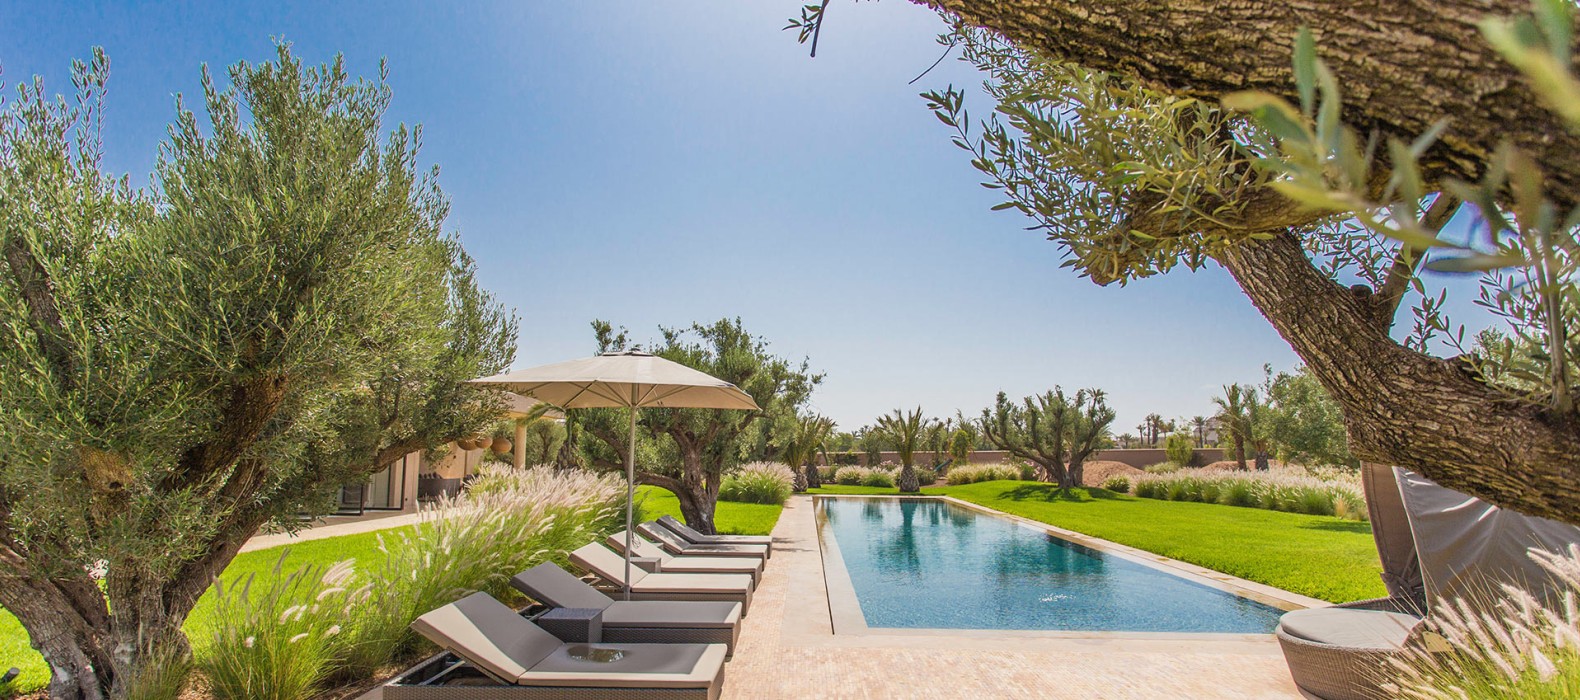 Exterior pool area of Villa Oasis in Marrakech